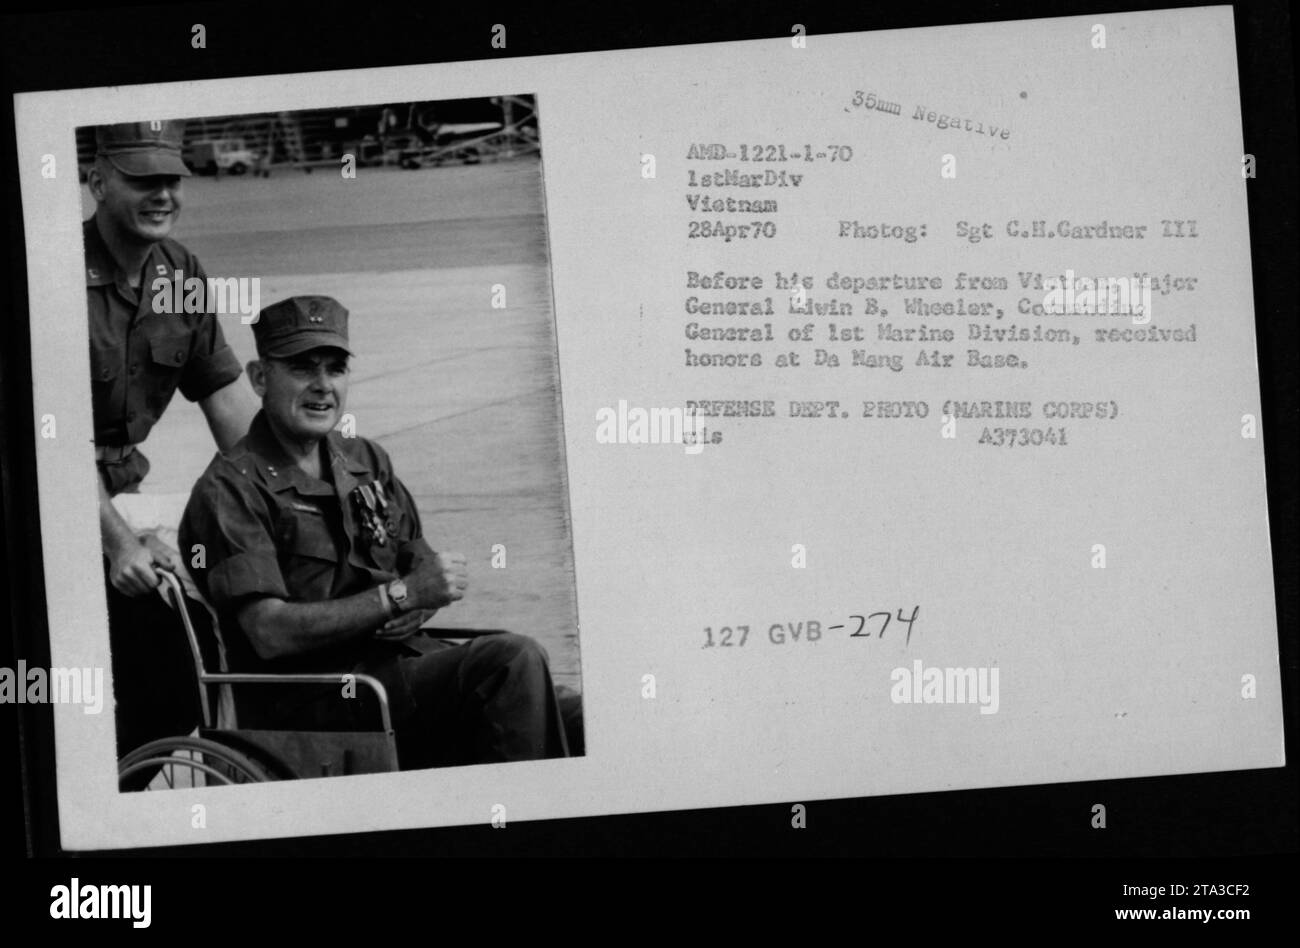 Vietnam War: Major General Edvin B. Wheeler, Commanding General of the 1st Marine Division, receives honors at Da Nang Air Base before his departure from Vietnam. Photograph taken on April 28, 1970. (Image: Sgt C.H. Gardner III / Department of Defense) Stock Photo